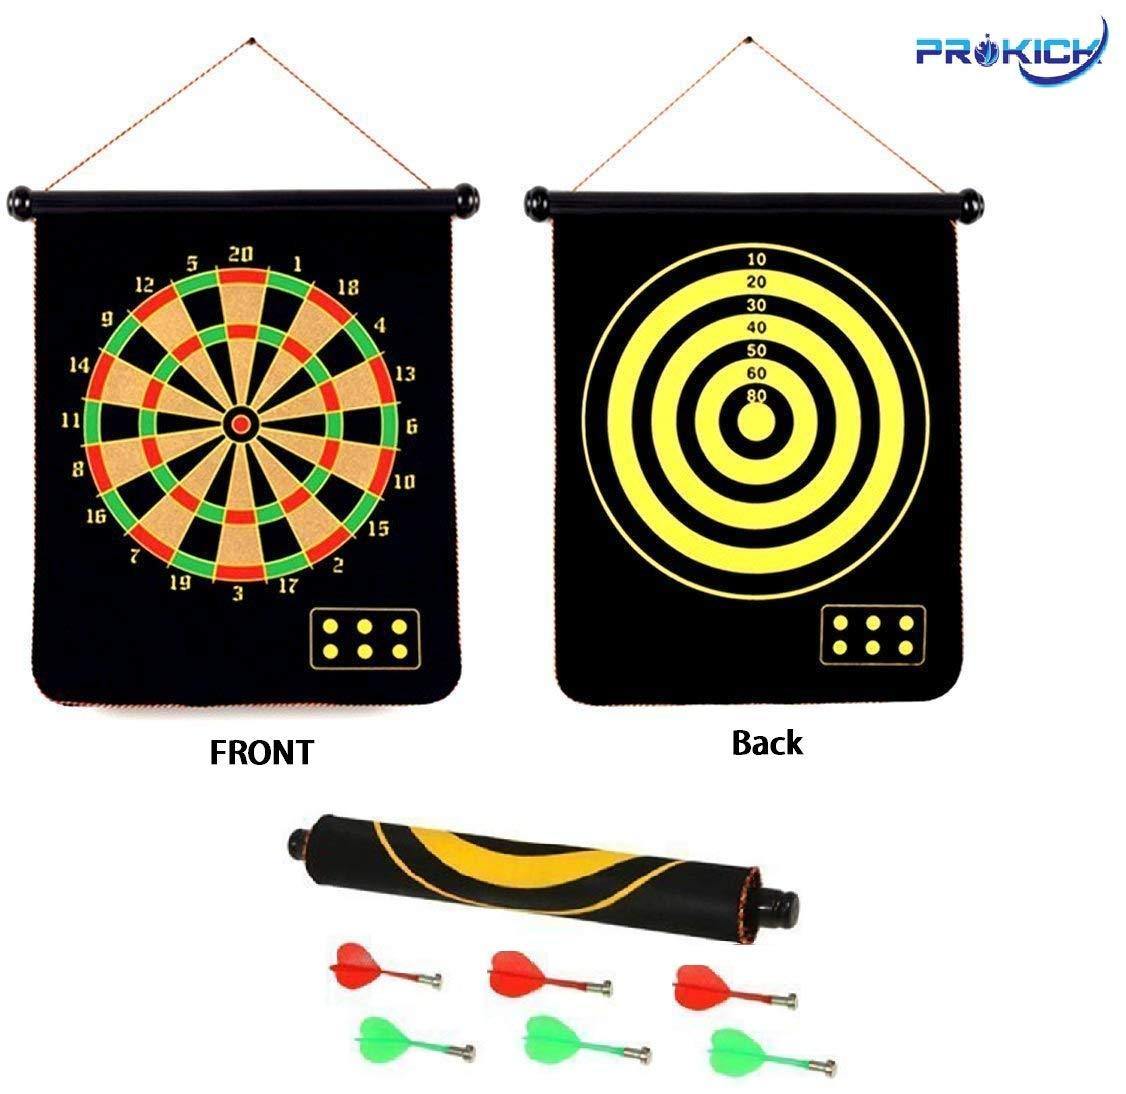 Prokick High Magnetic Power Portable Dart Game 17-Inch - Best Price online Prokicksports.com